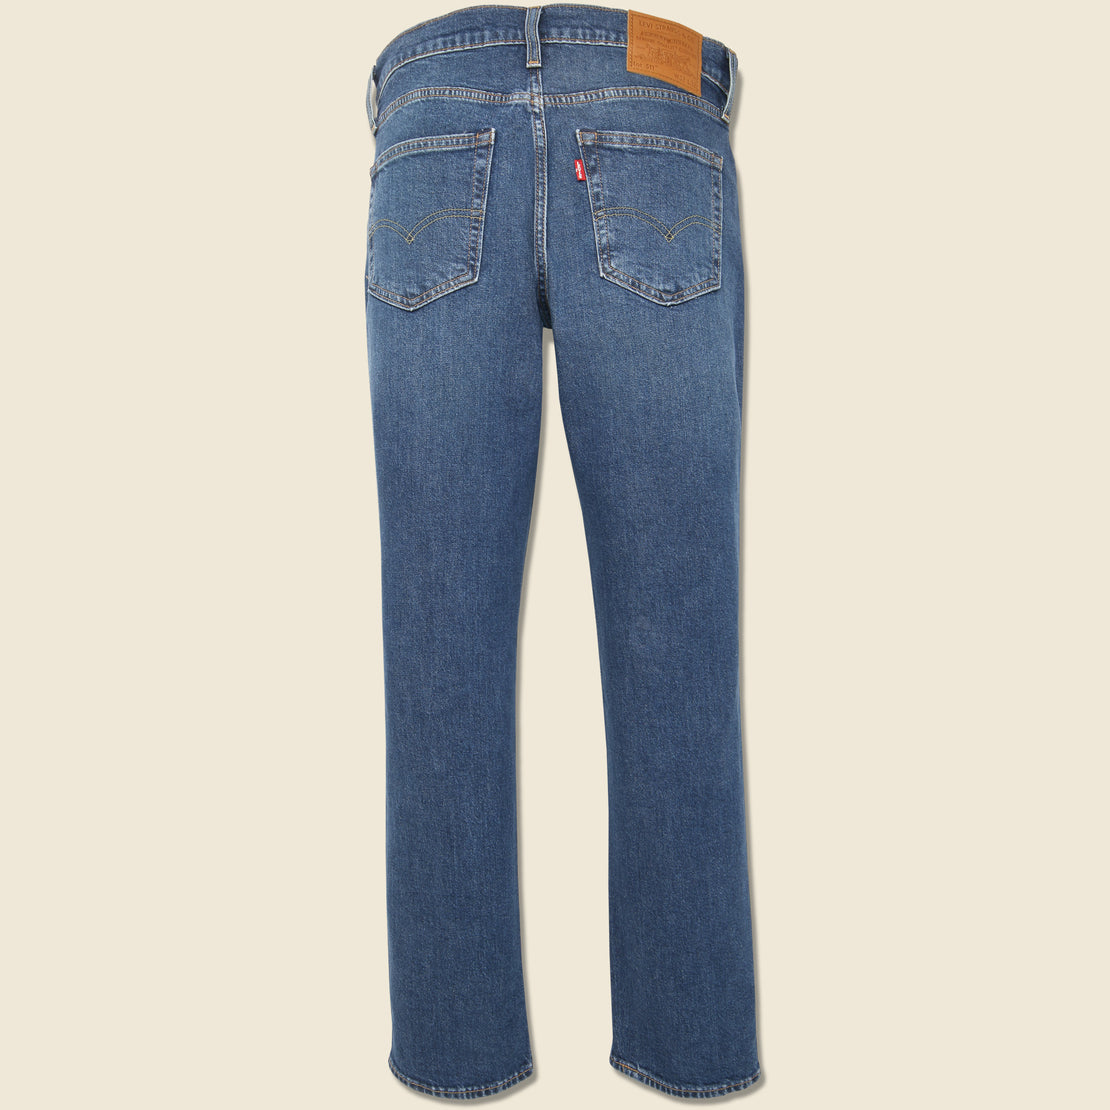 511 Slim Jeans - Apples to Apples - Levis Premium - STAG Provisions - Pants - Denim